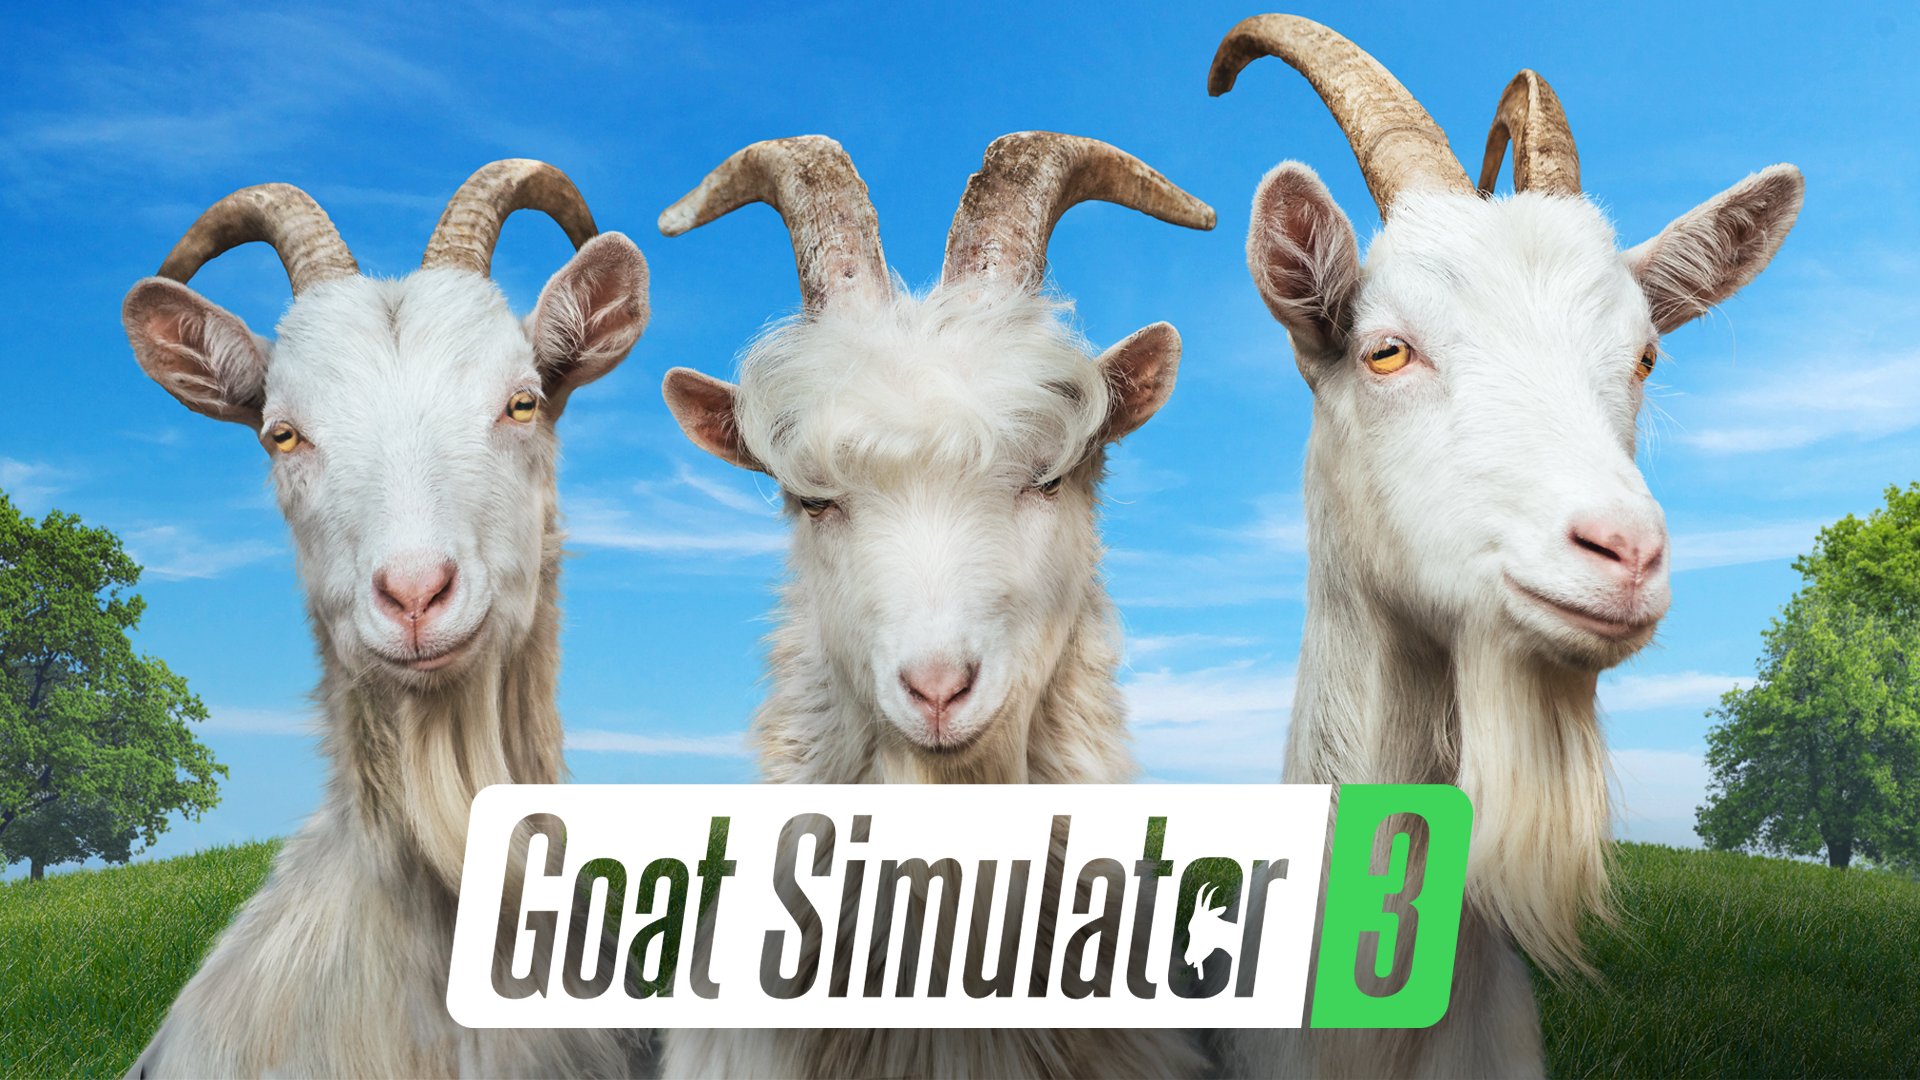 Video For Goat Simulator 3 Scores a November Release Date